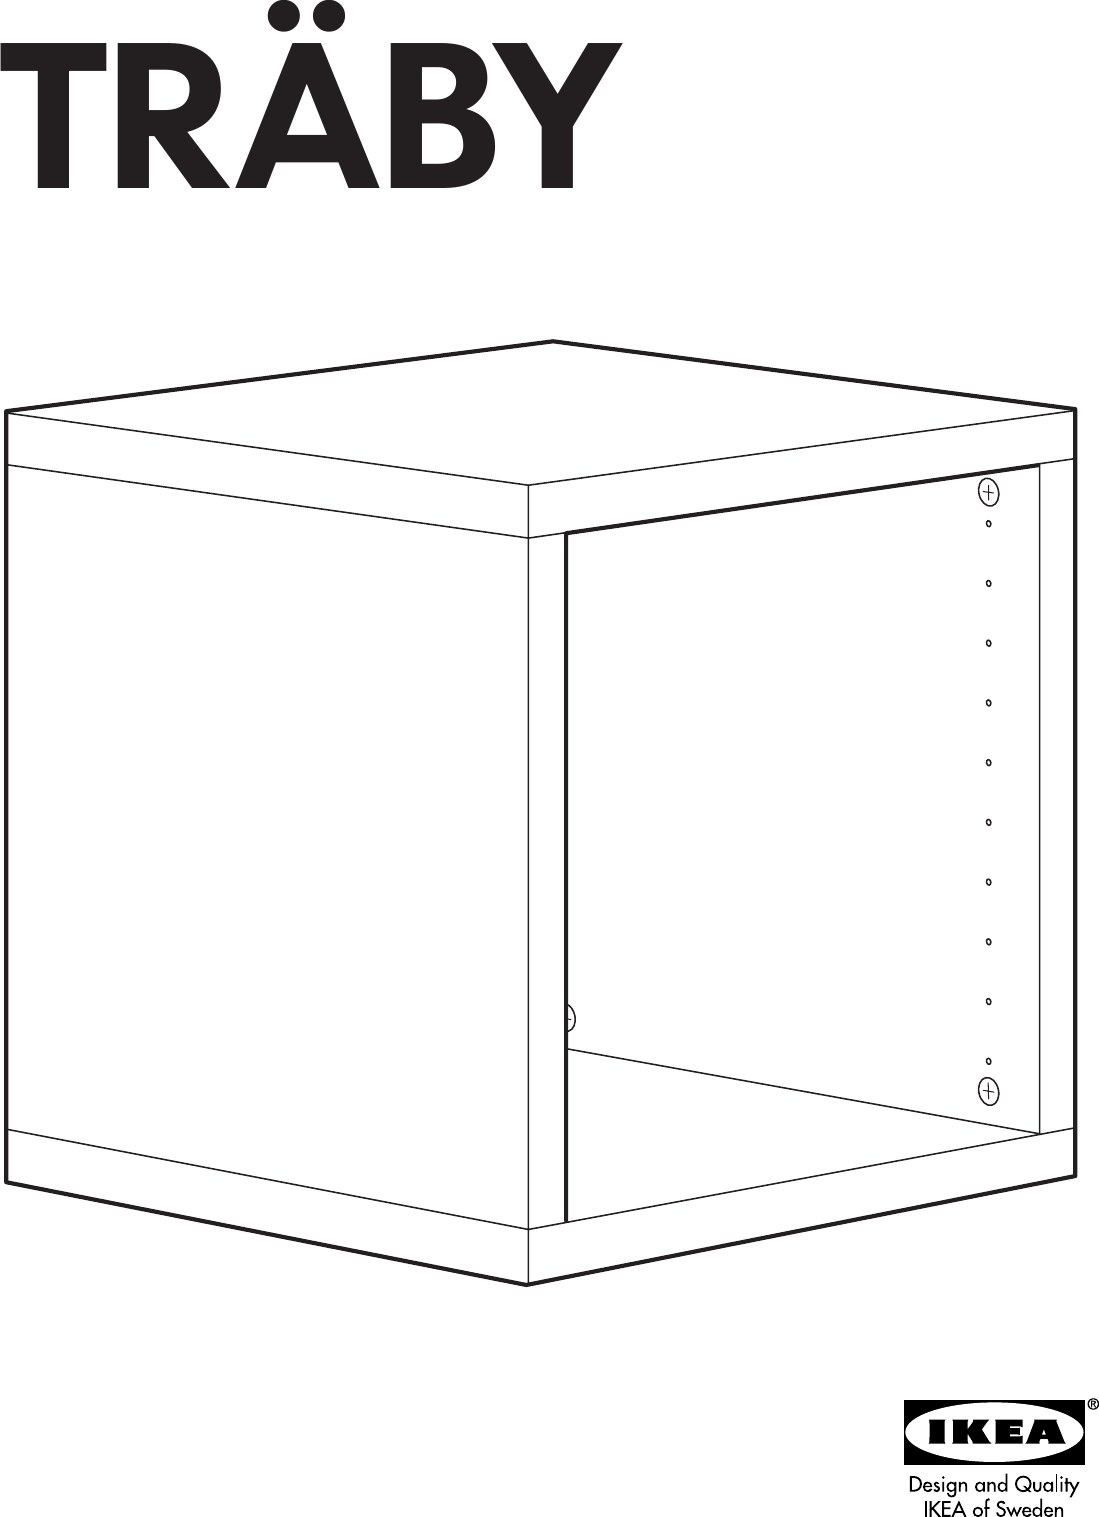 Page 1 of 12 - Ikea Ikea-Traby-Shelf-Unit-16X16-Assembly-Instruction